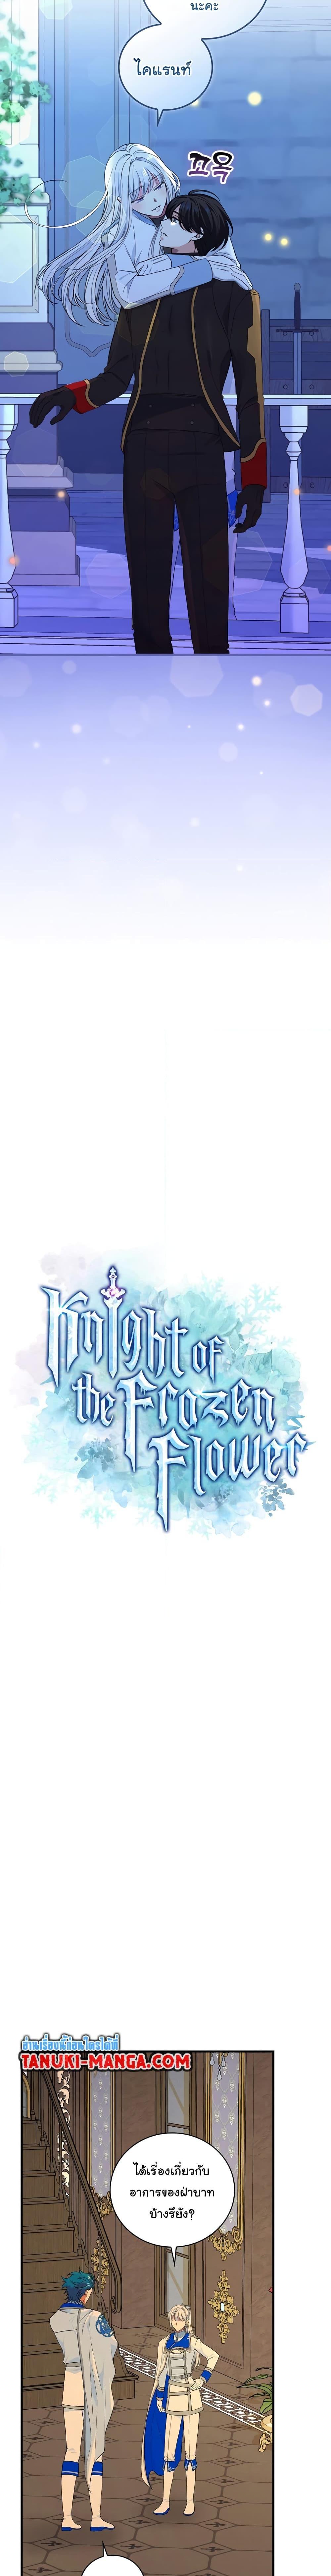 Knight of the Frozen Flower ตอนที่ 69 (3)